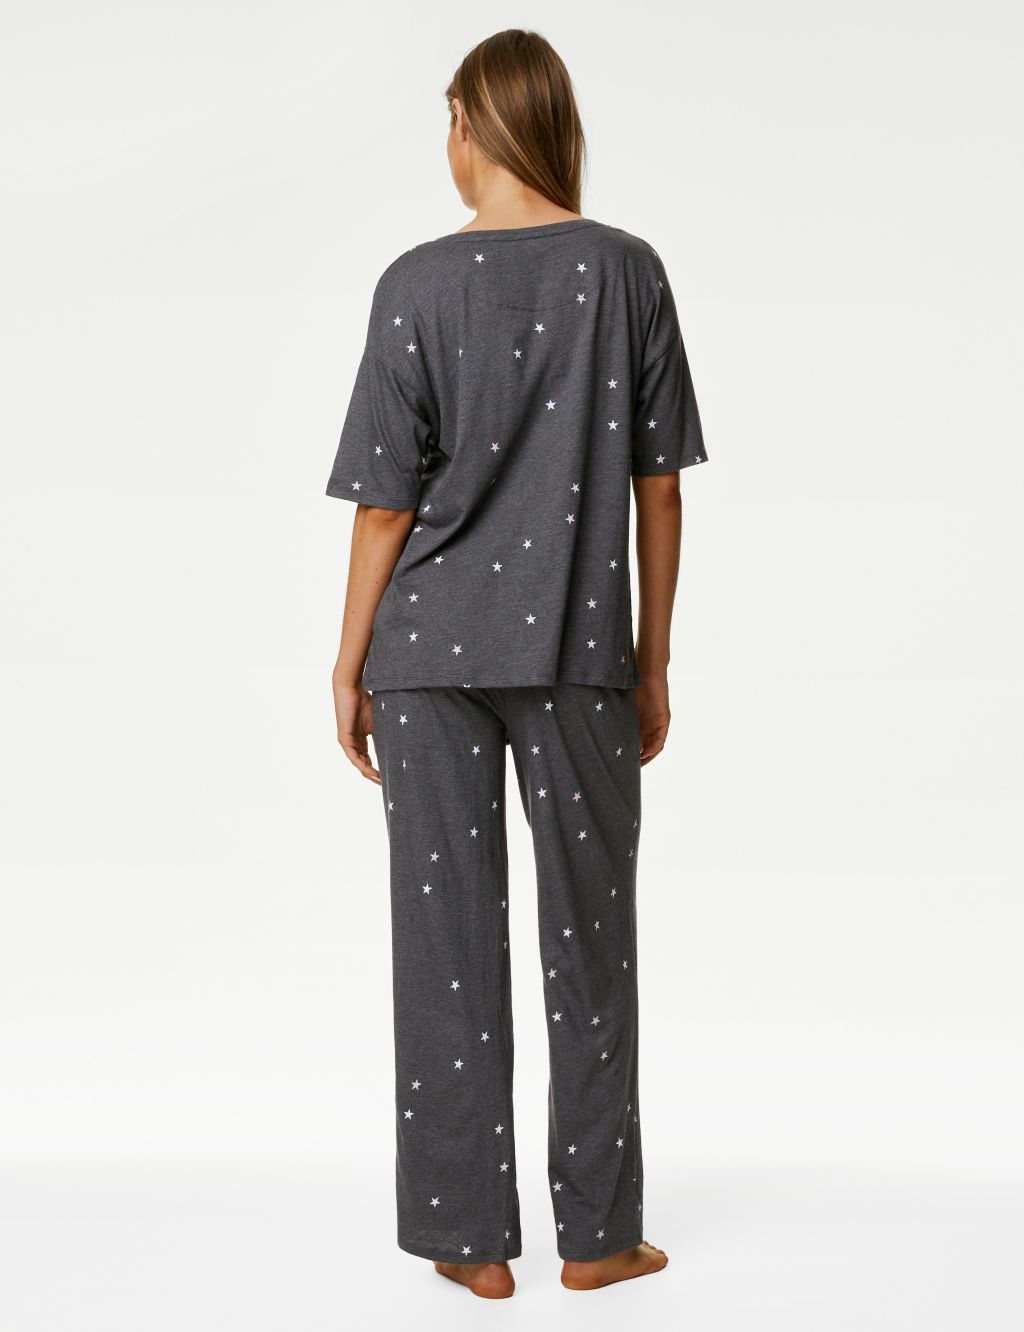 Cotton Modal Star Print Pyjama Set image 6